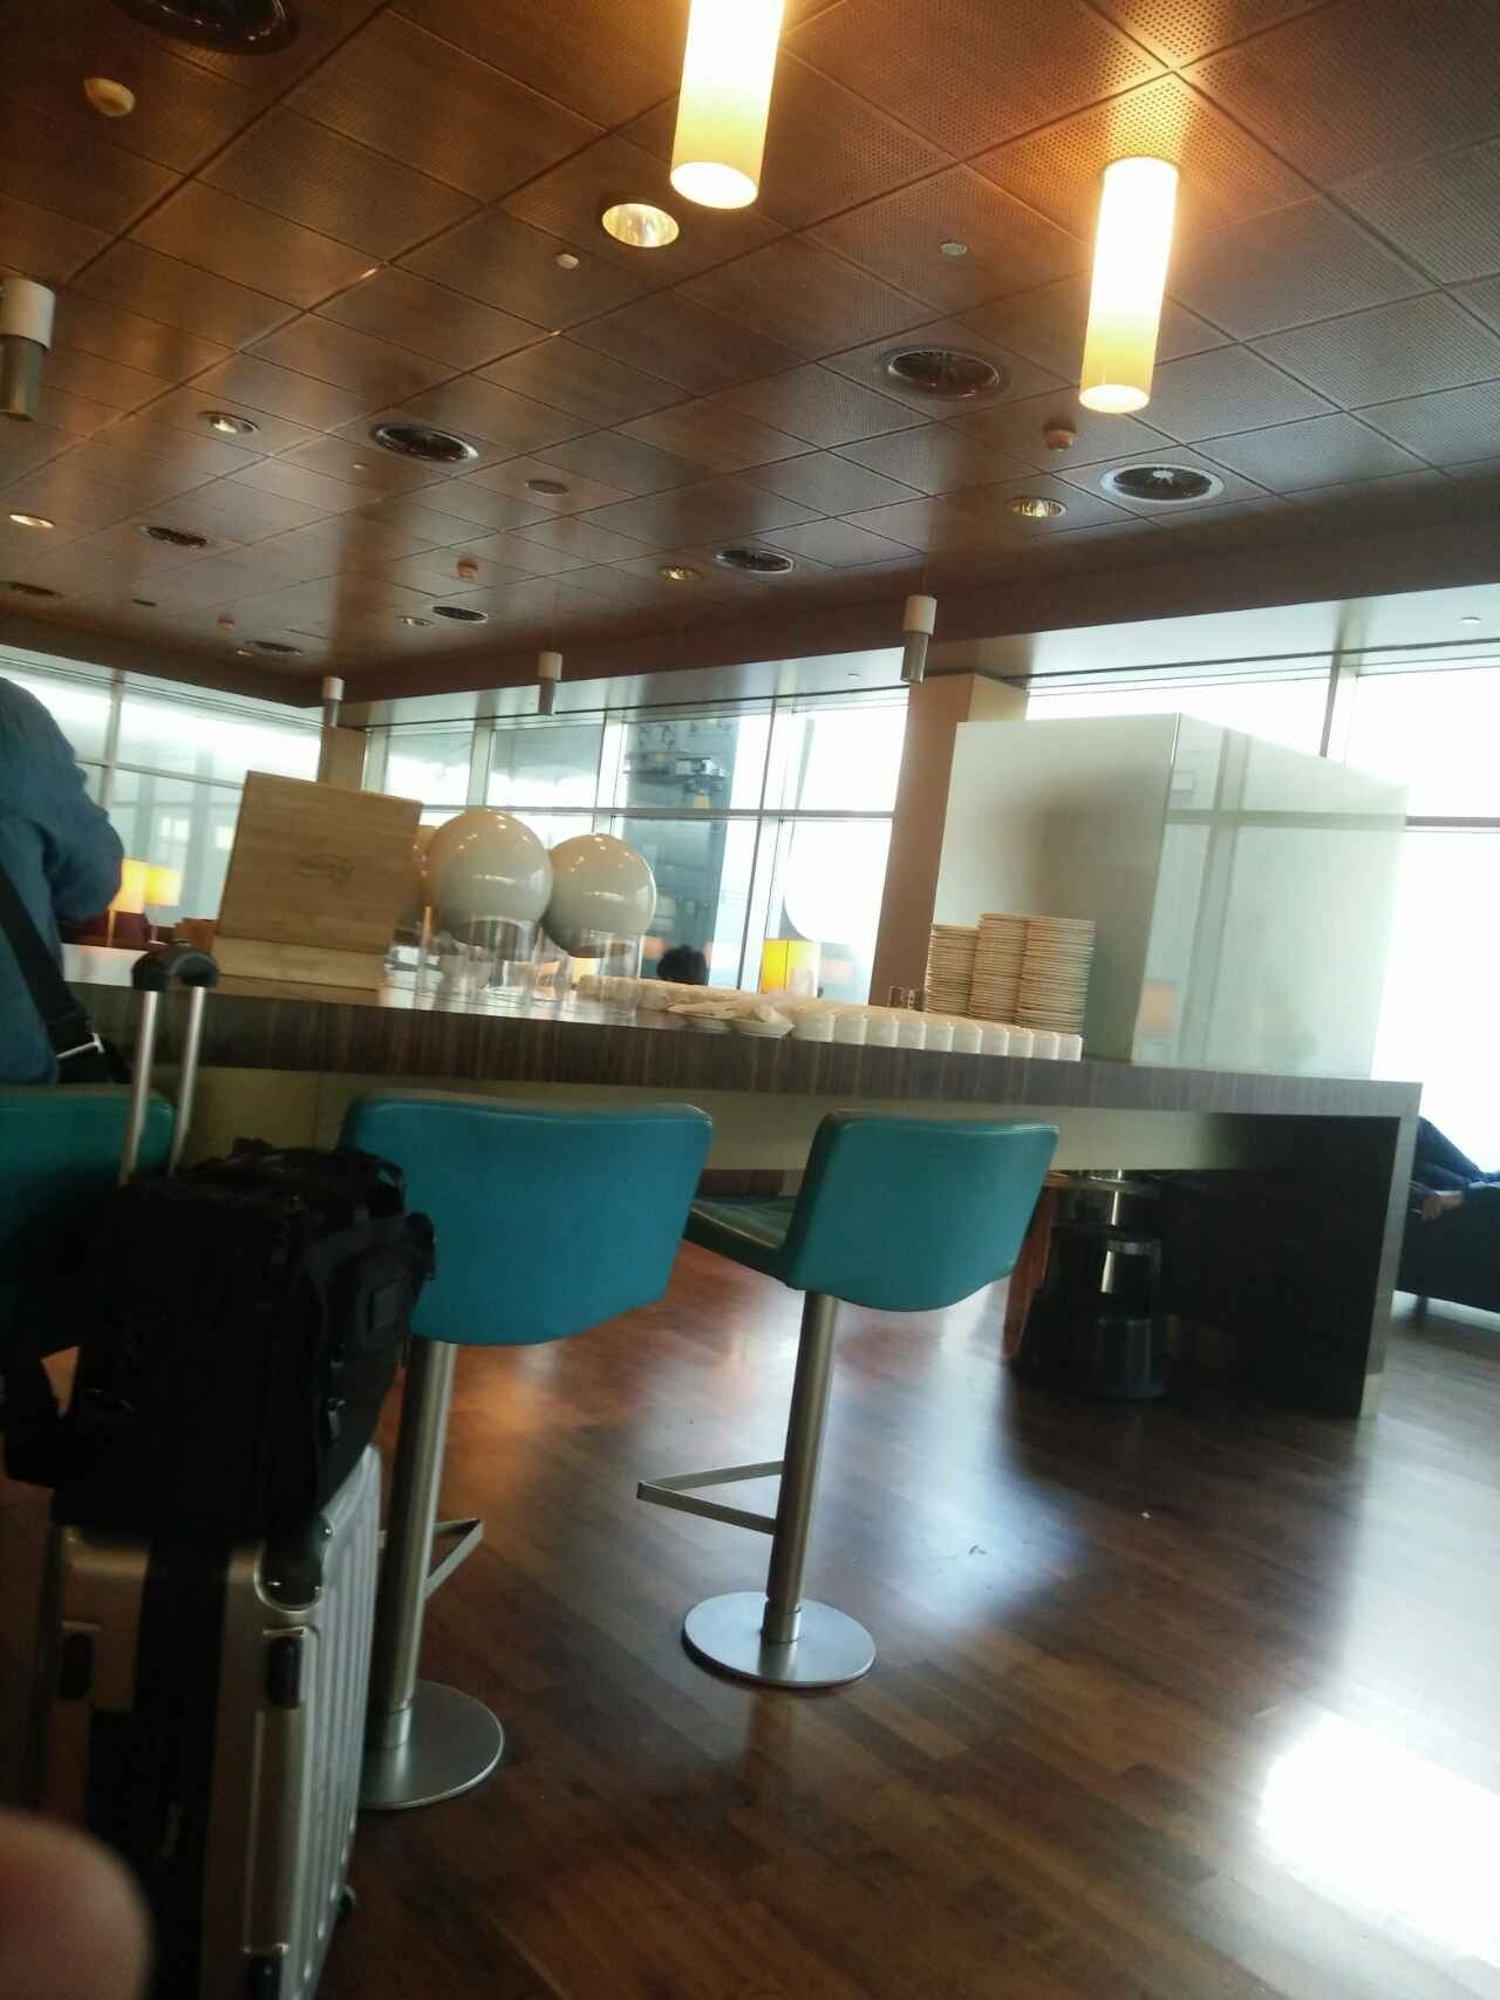 KLM Crown Lounge (25) image 8 of 15